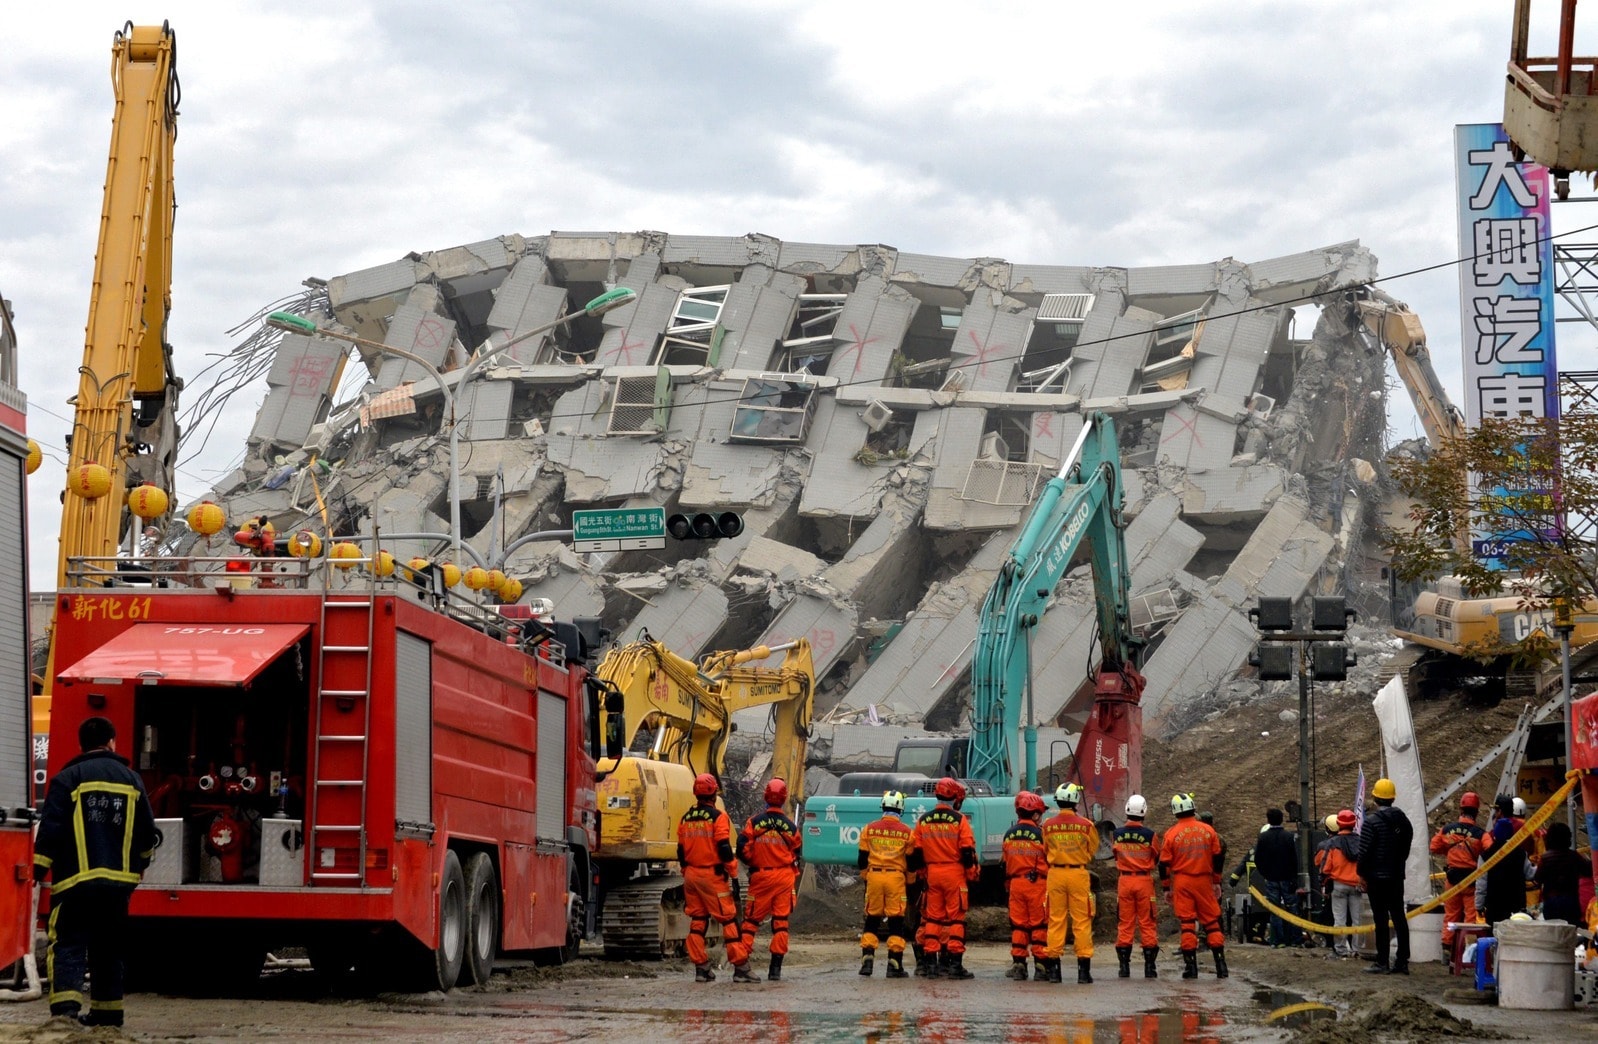 Dodental aardbeving in Taiwan gestegen naar 116